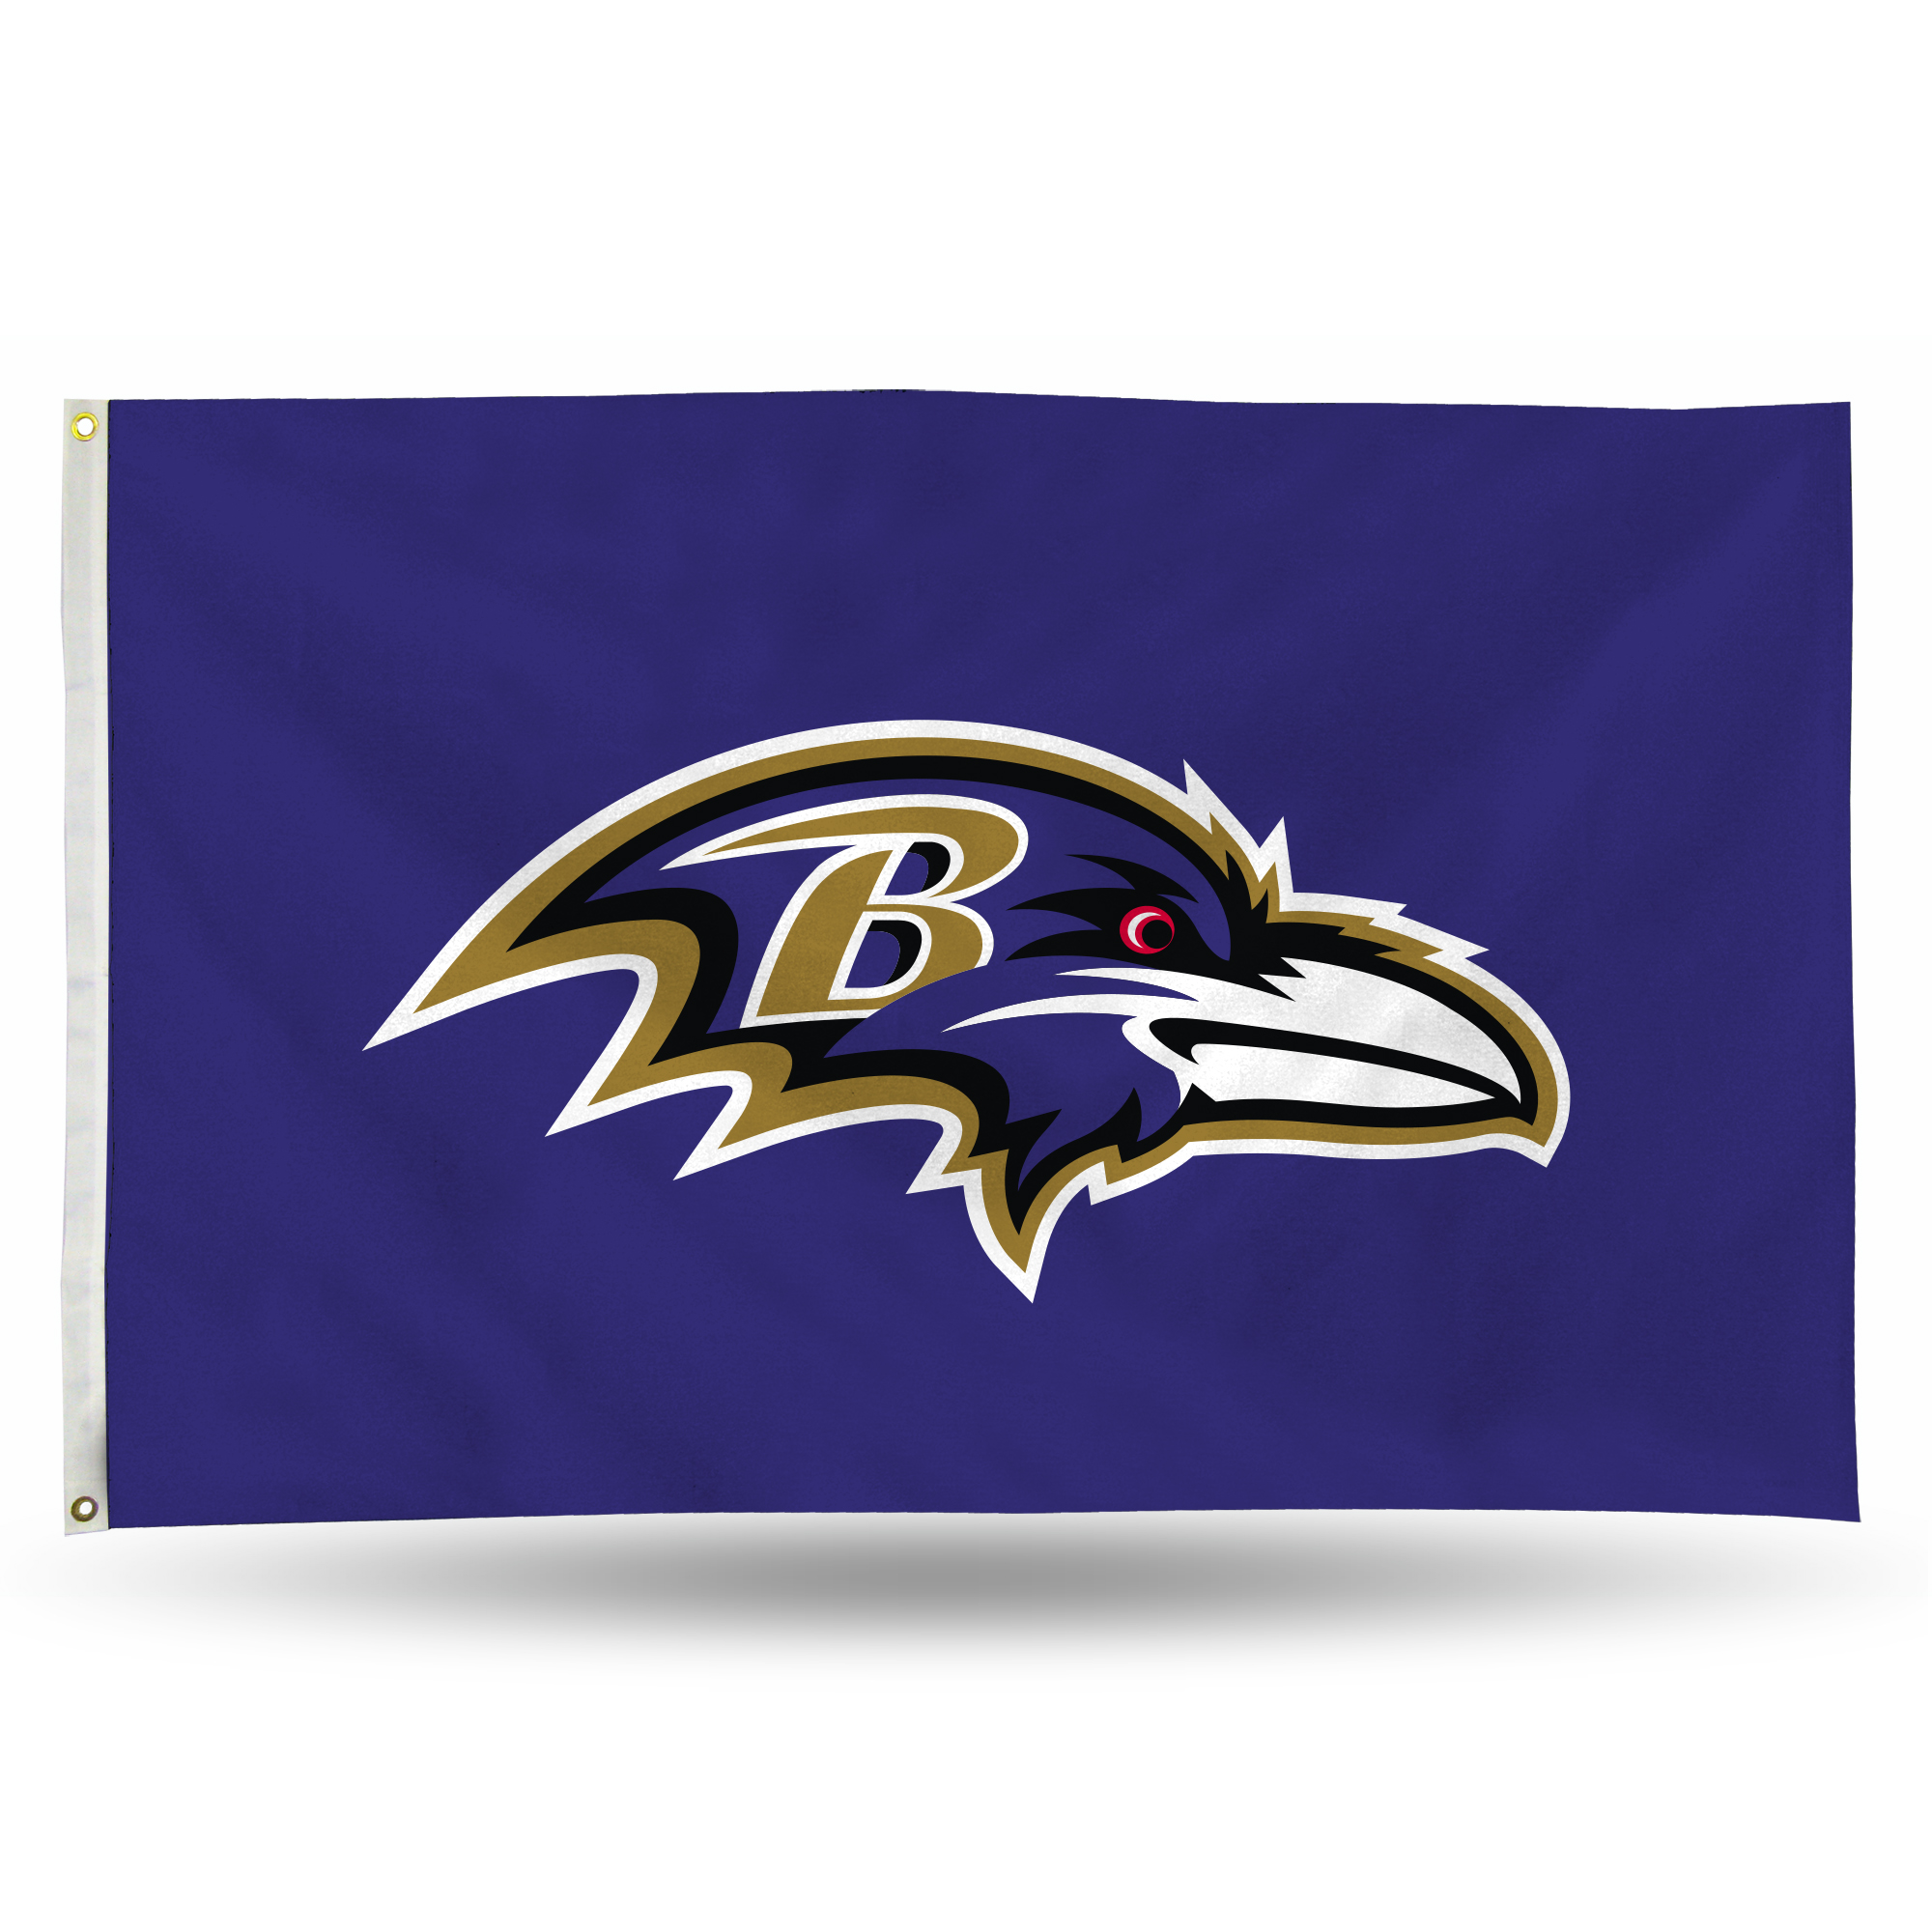 Rico Industries NFL Football Baltimore Ravens Standard 3' x 5' Banner Flag